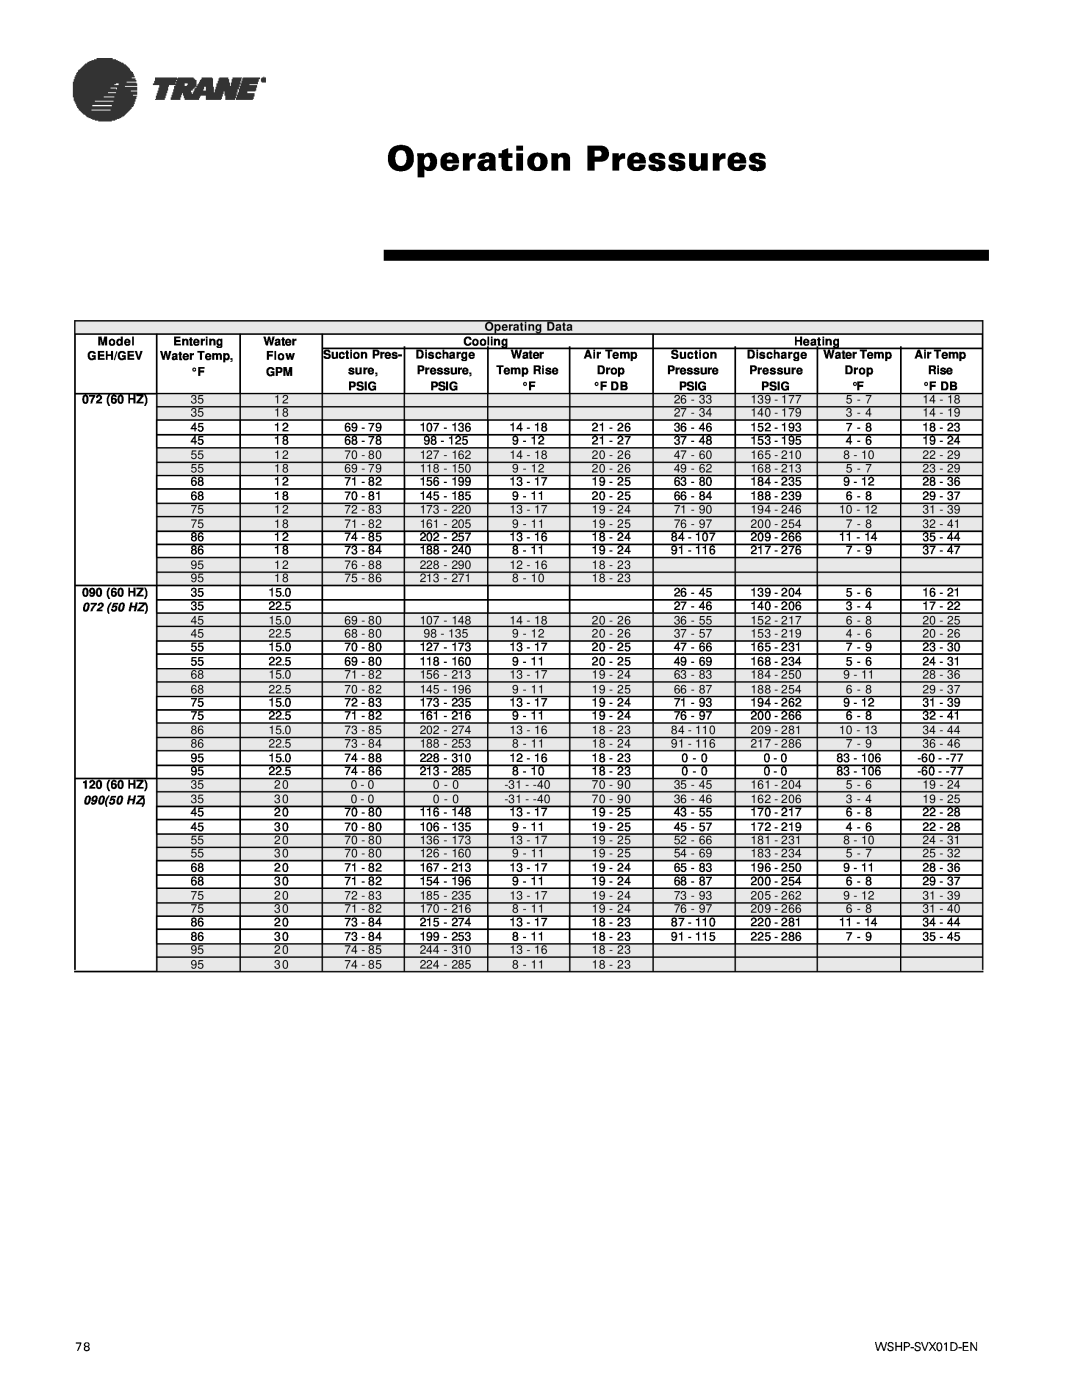 Trane manual Operation Pressures, Model Entering GEH/GEV Water Temp F, 072 50 HZ, 09050 HZ 